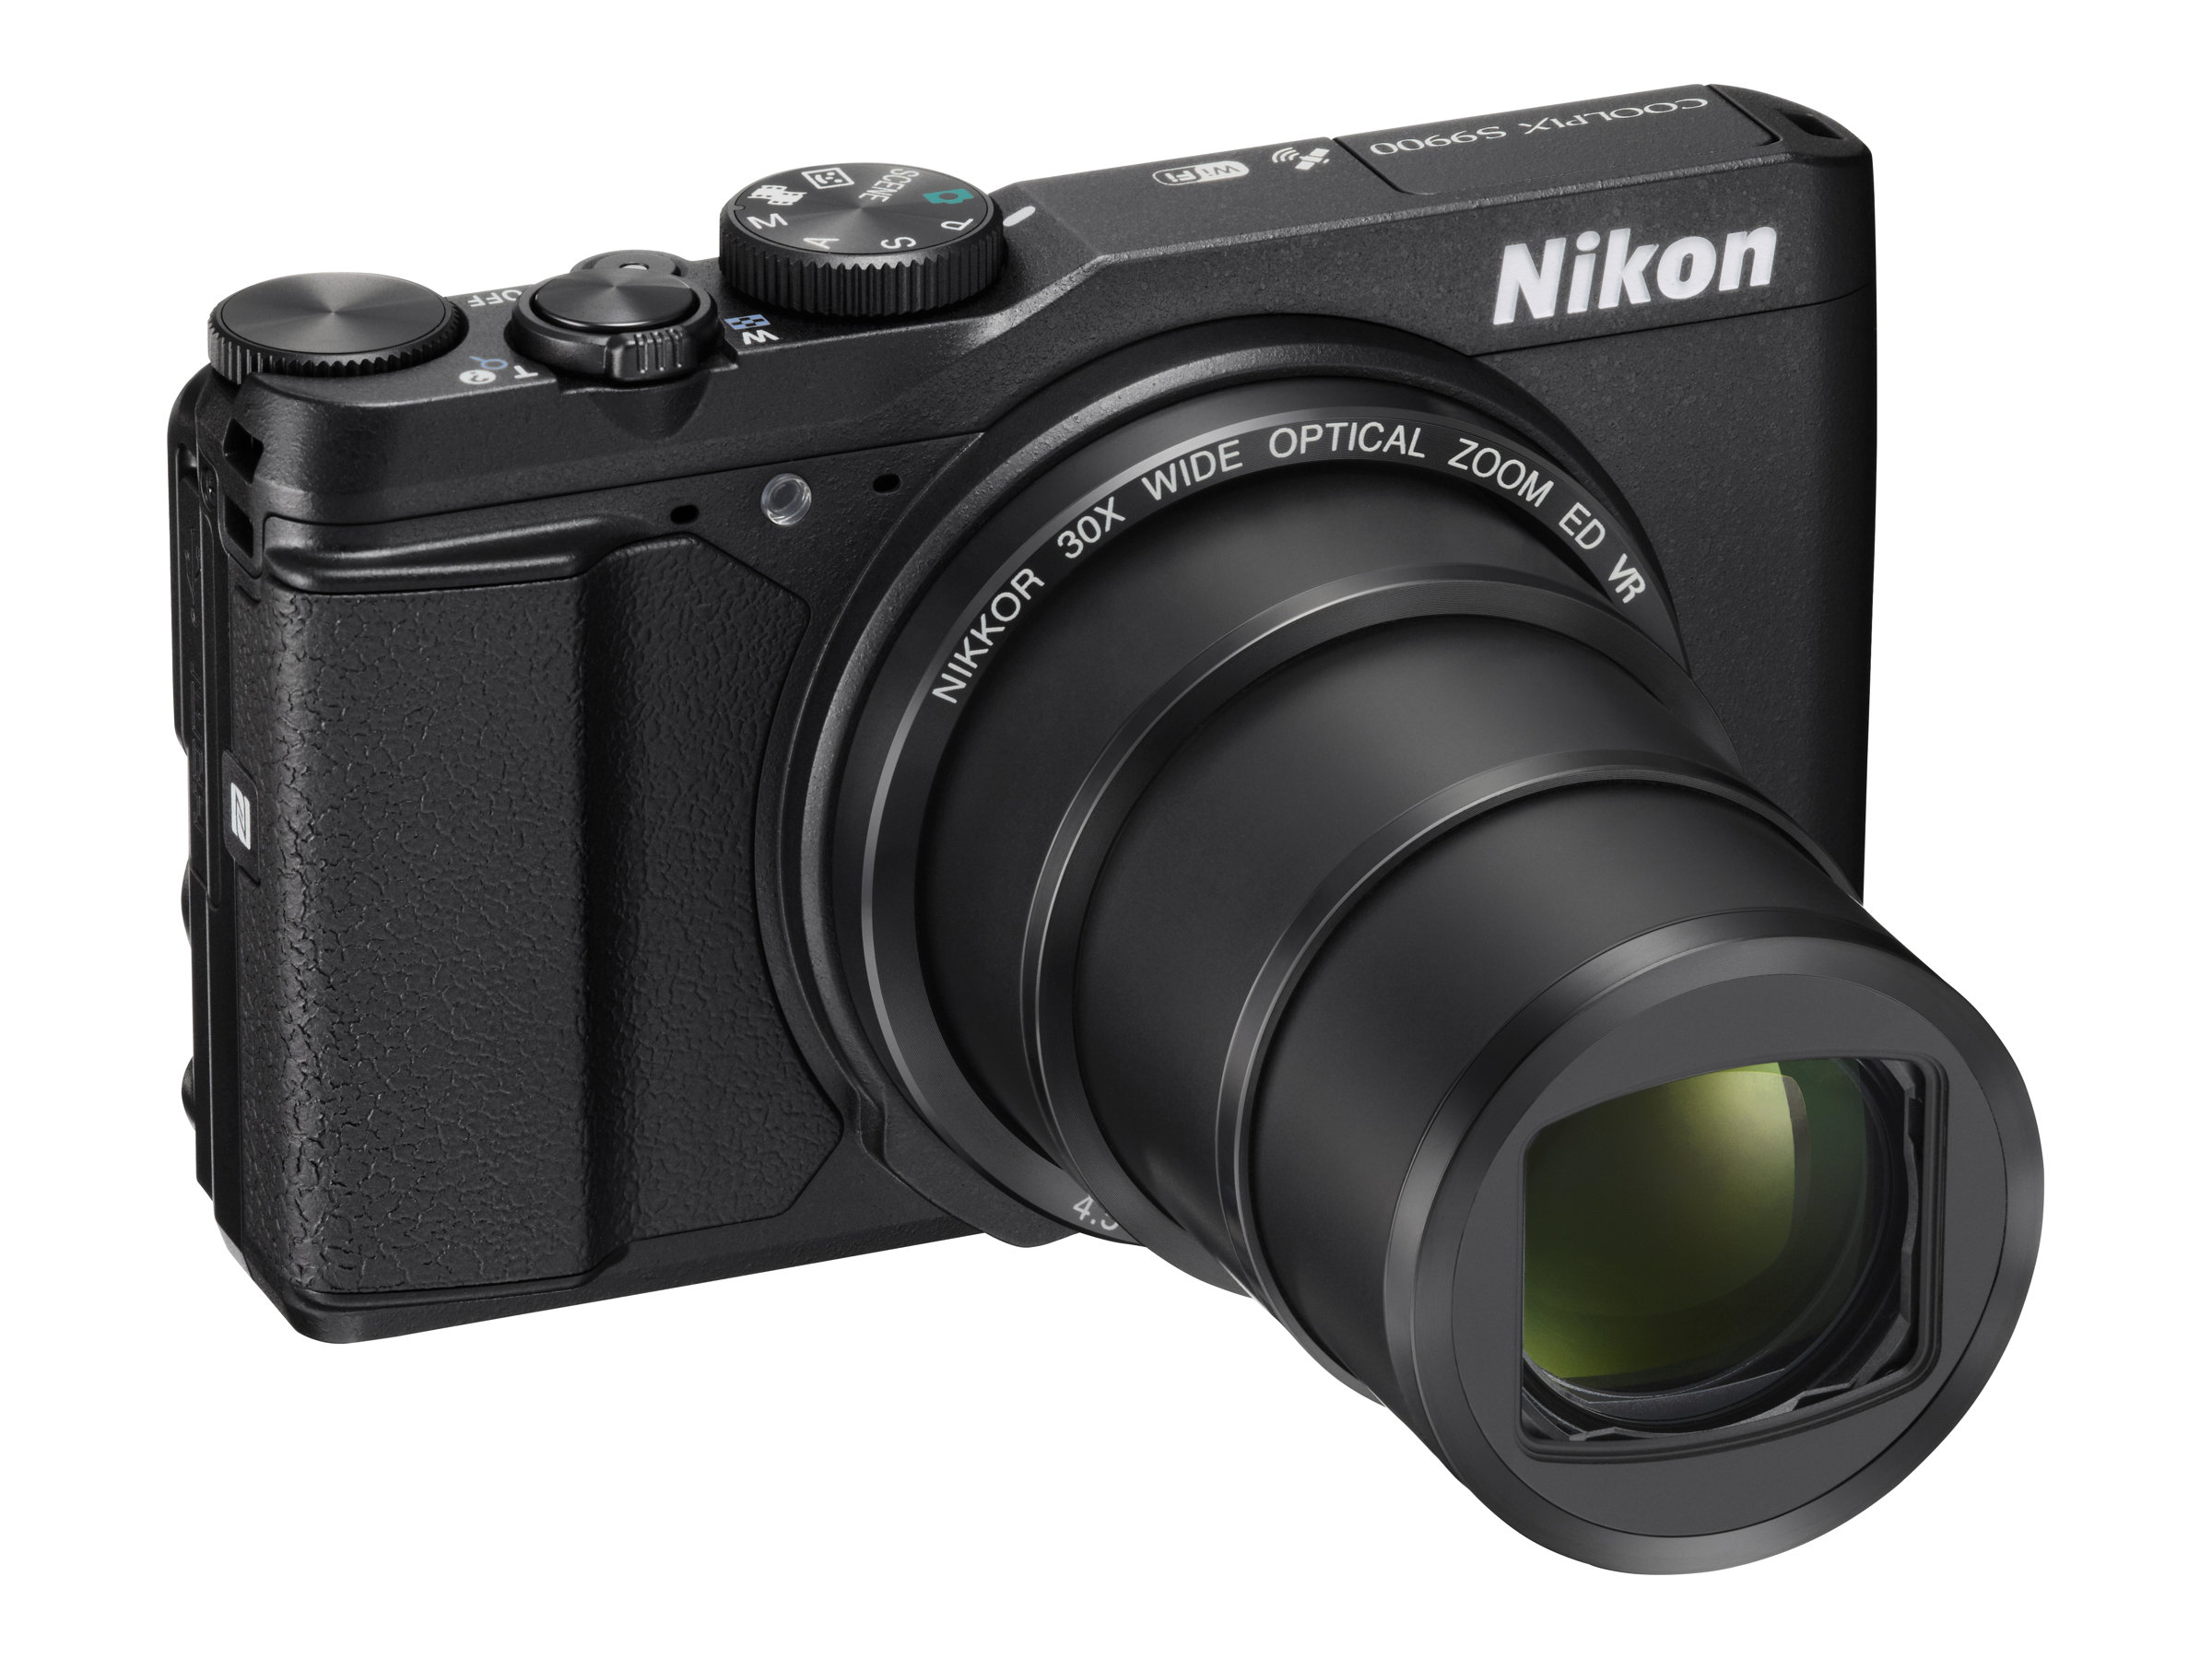 Nikon Coolpix S9900 - Digital camera - compact - 16.0 MP - 1080p - 30x optical zoom - Wi-Fi, NFC - black - image 3 of 6